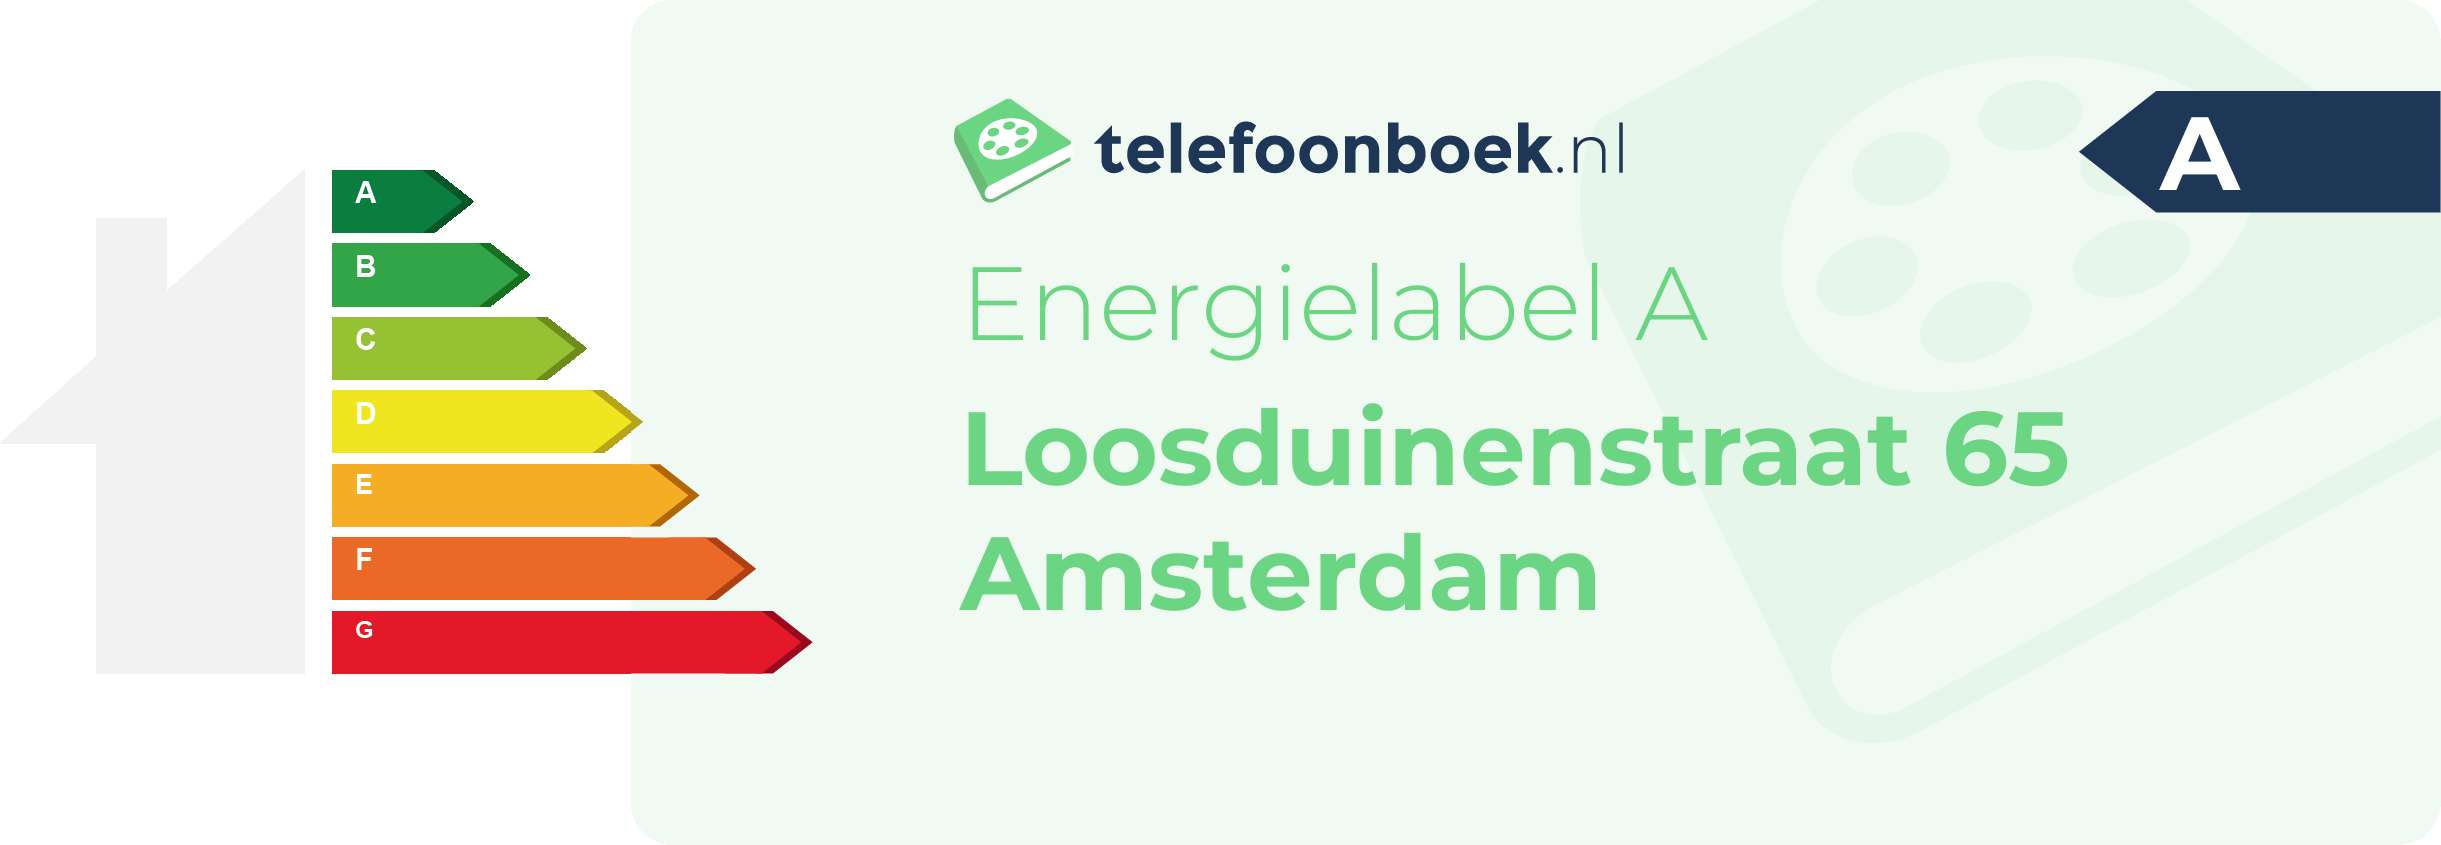 Energielabel Loosduinenstraat 65 Amsterdam